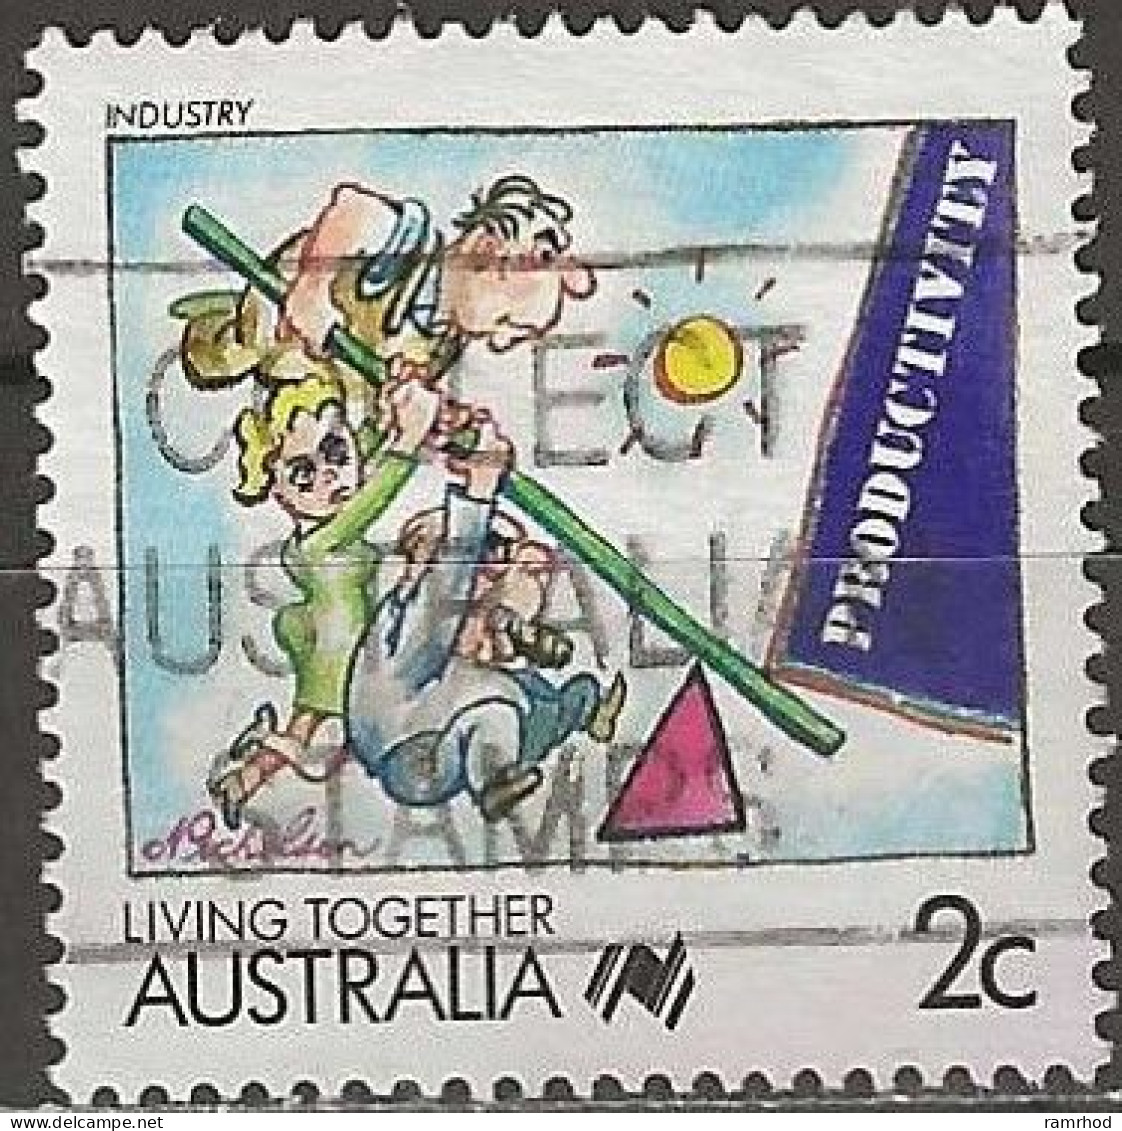 AUSTRALIA 1988 Living Together - 2c. - Industry (P. Nicholson) AVU - Oblitérés